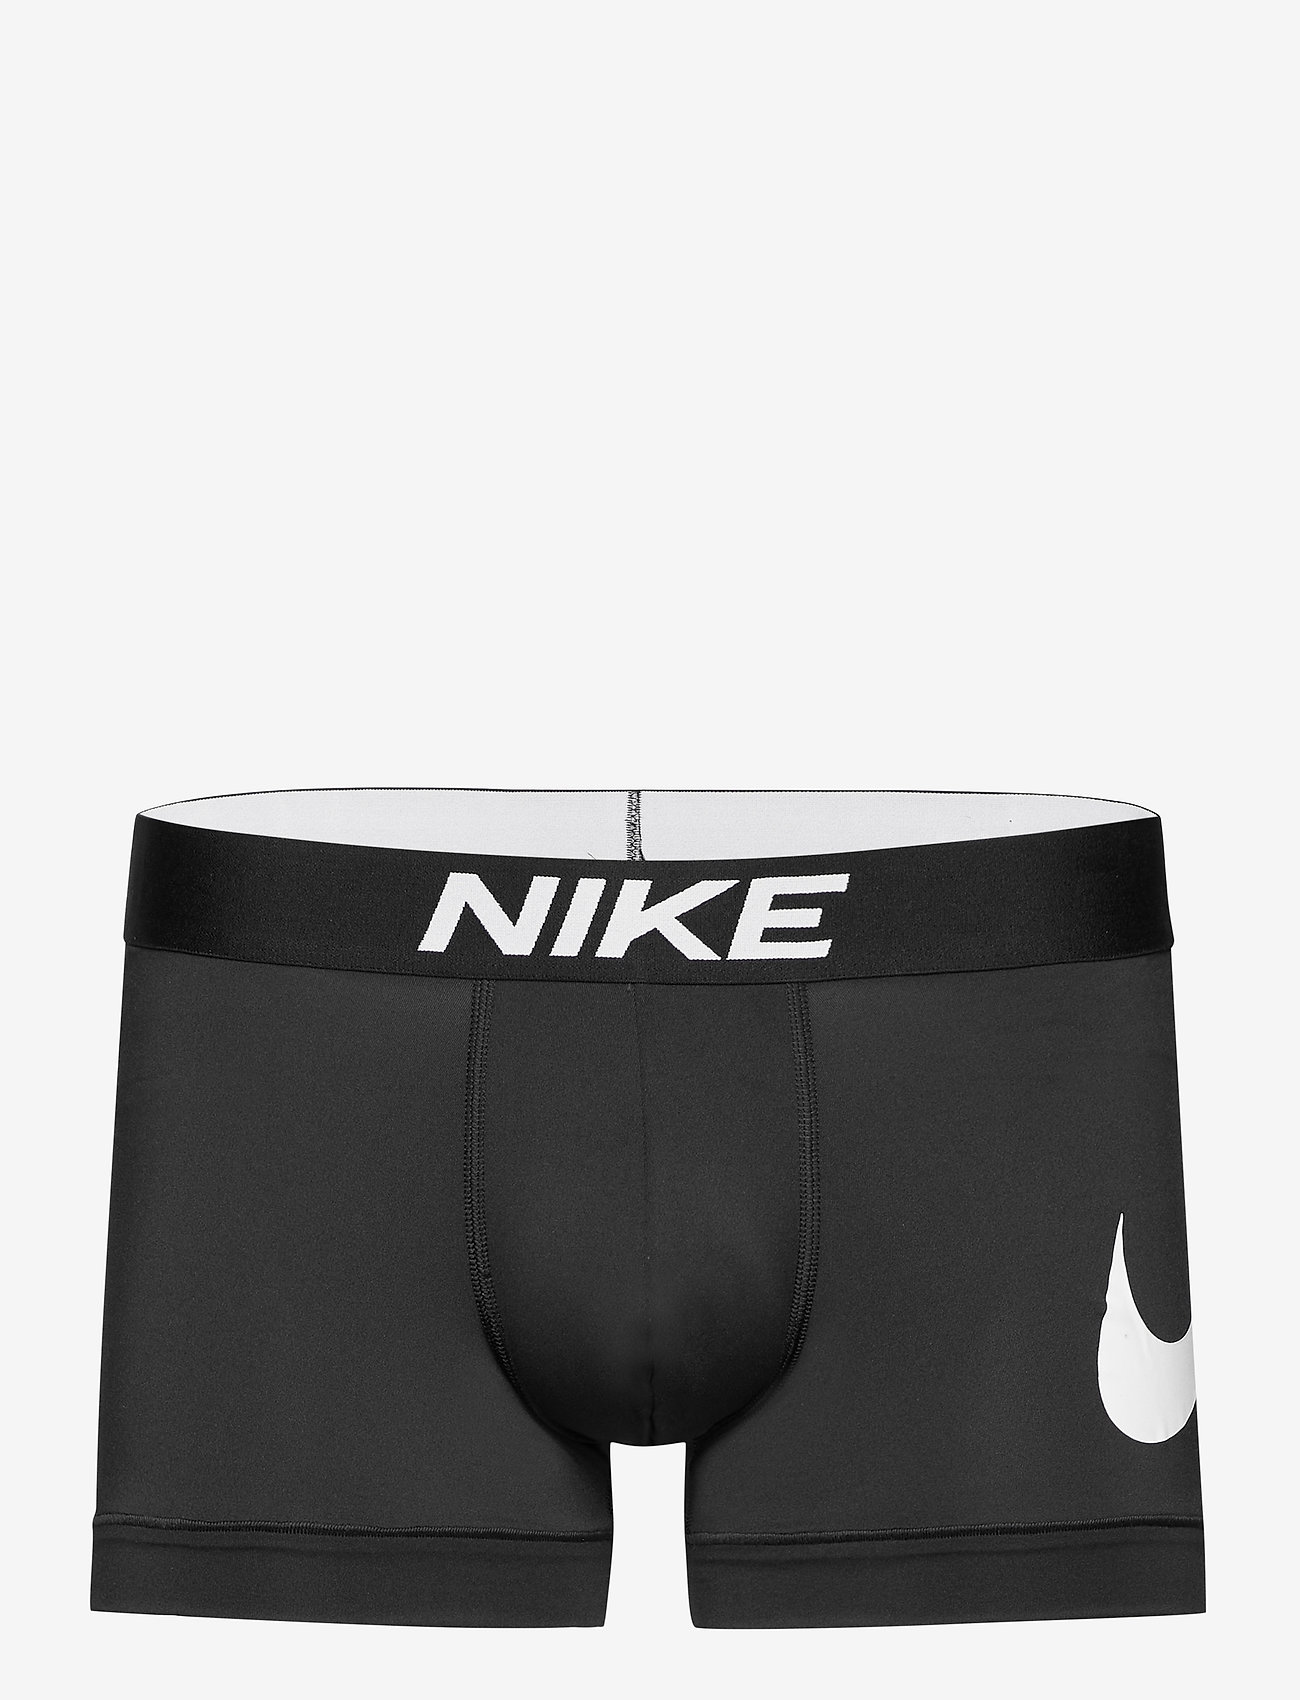 NIKE Trunk - Underwear | Boozt.com